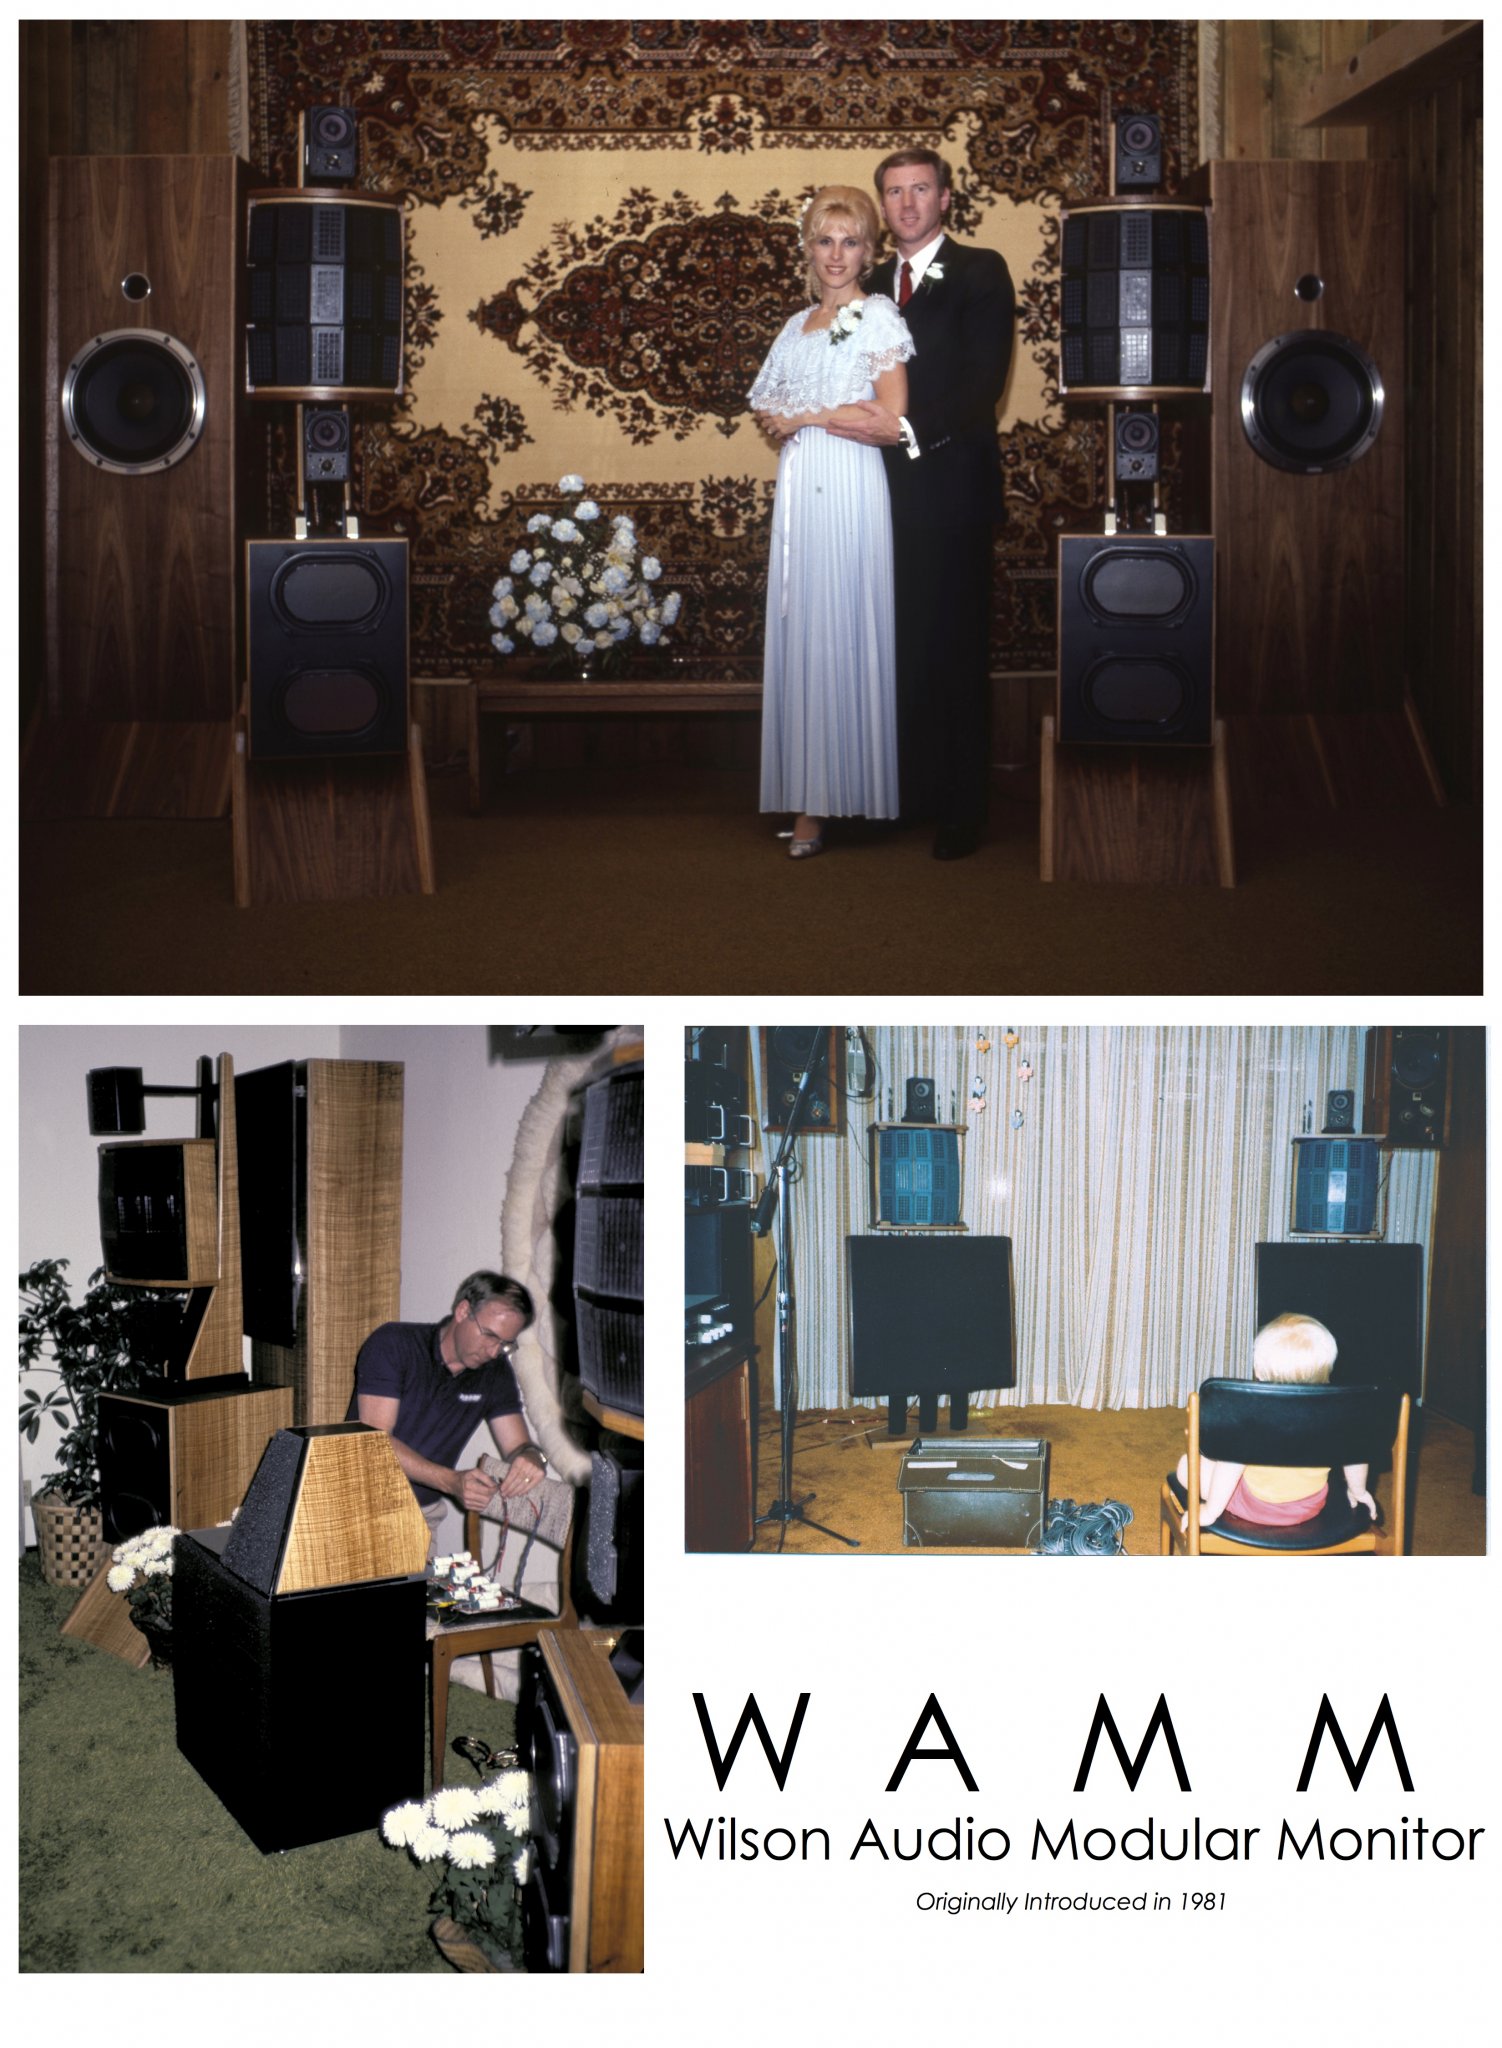 CES-2014-WAMM-Room-poster-history1.jpg